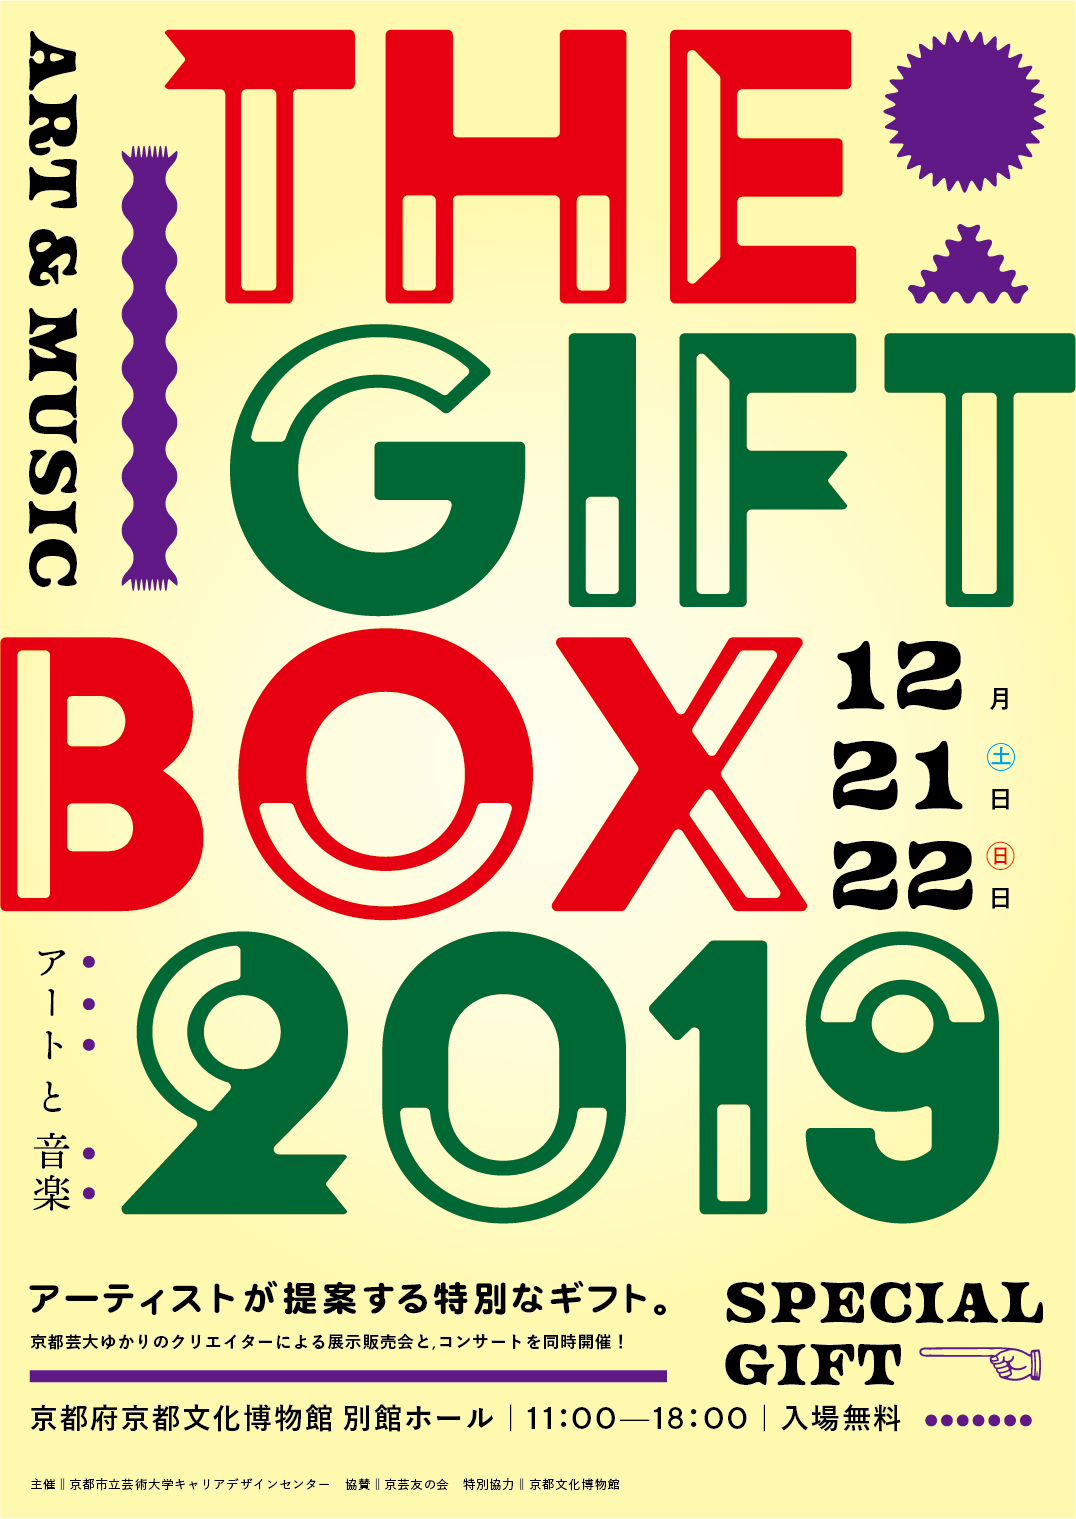 THE GIFT BOX 2019　アーティストが提案する特別なギフト。出展者情報